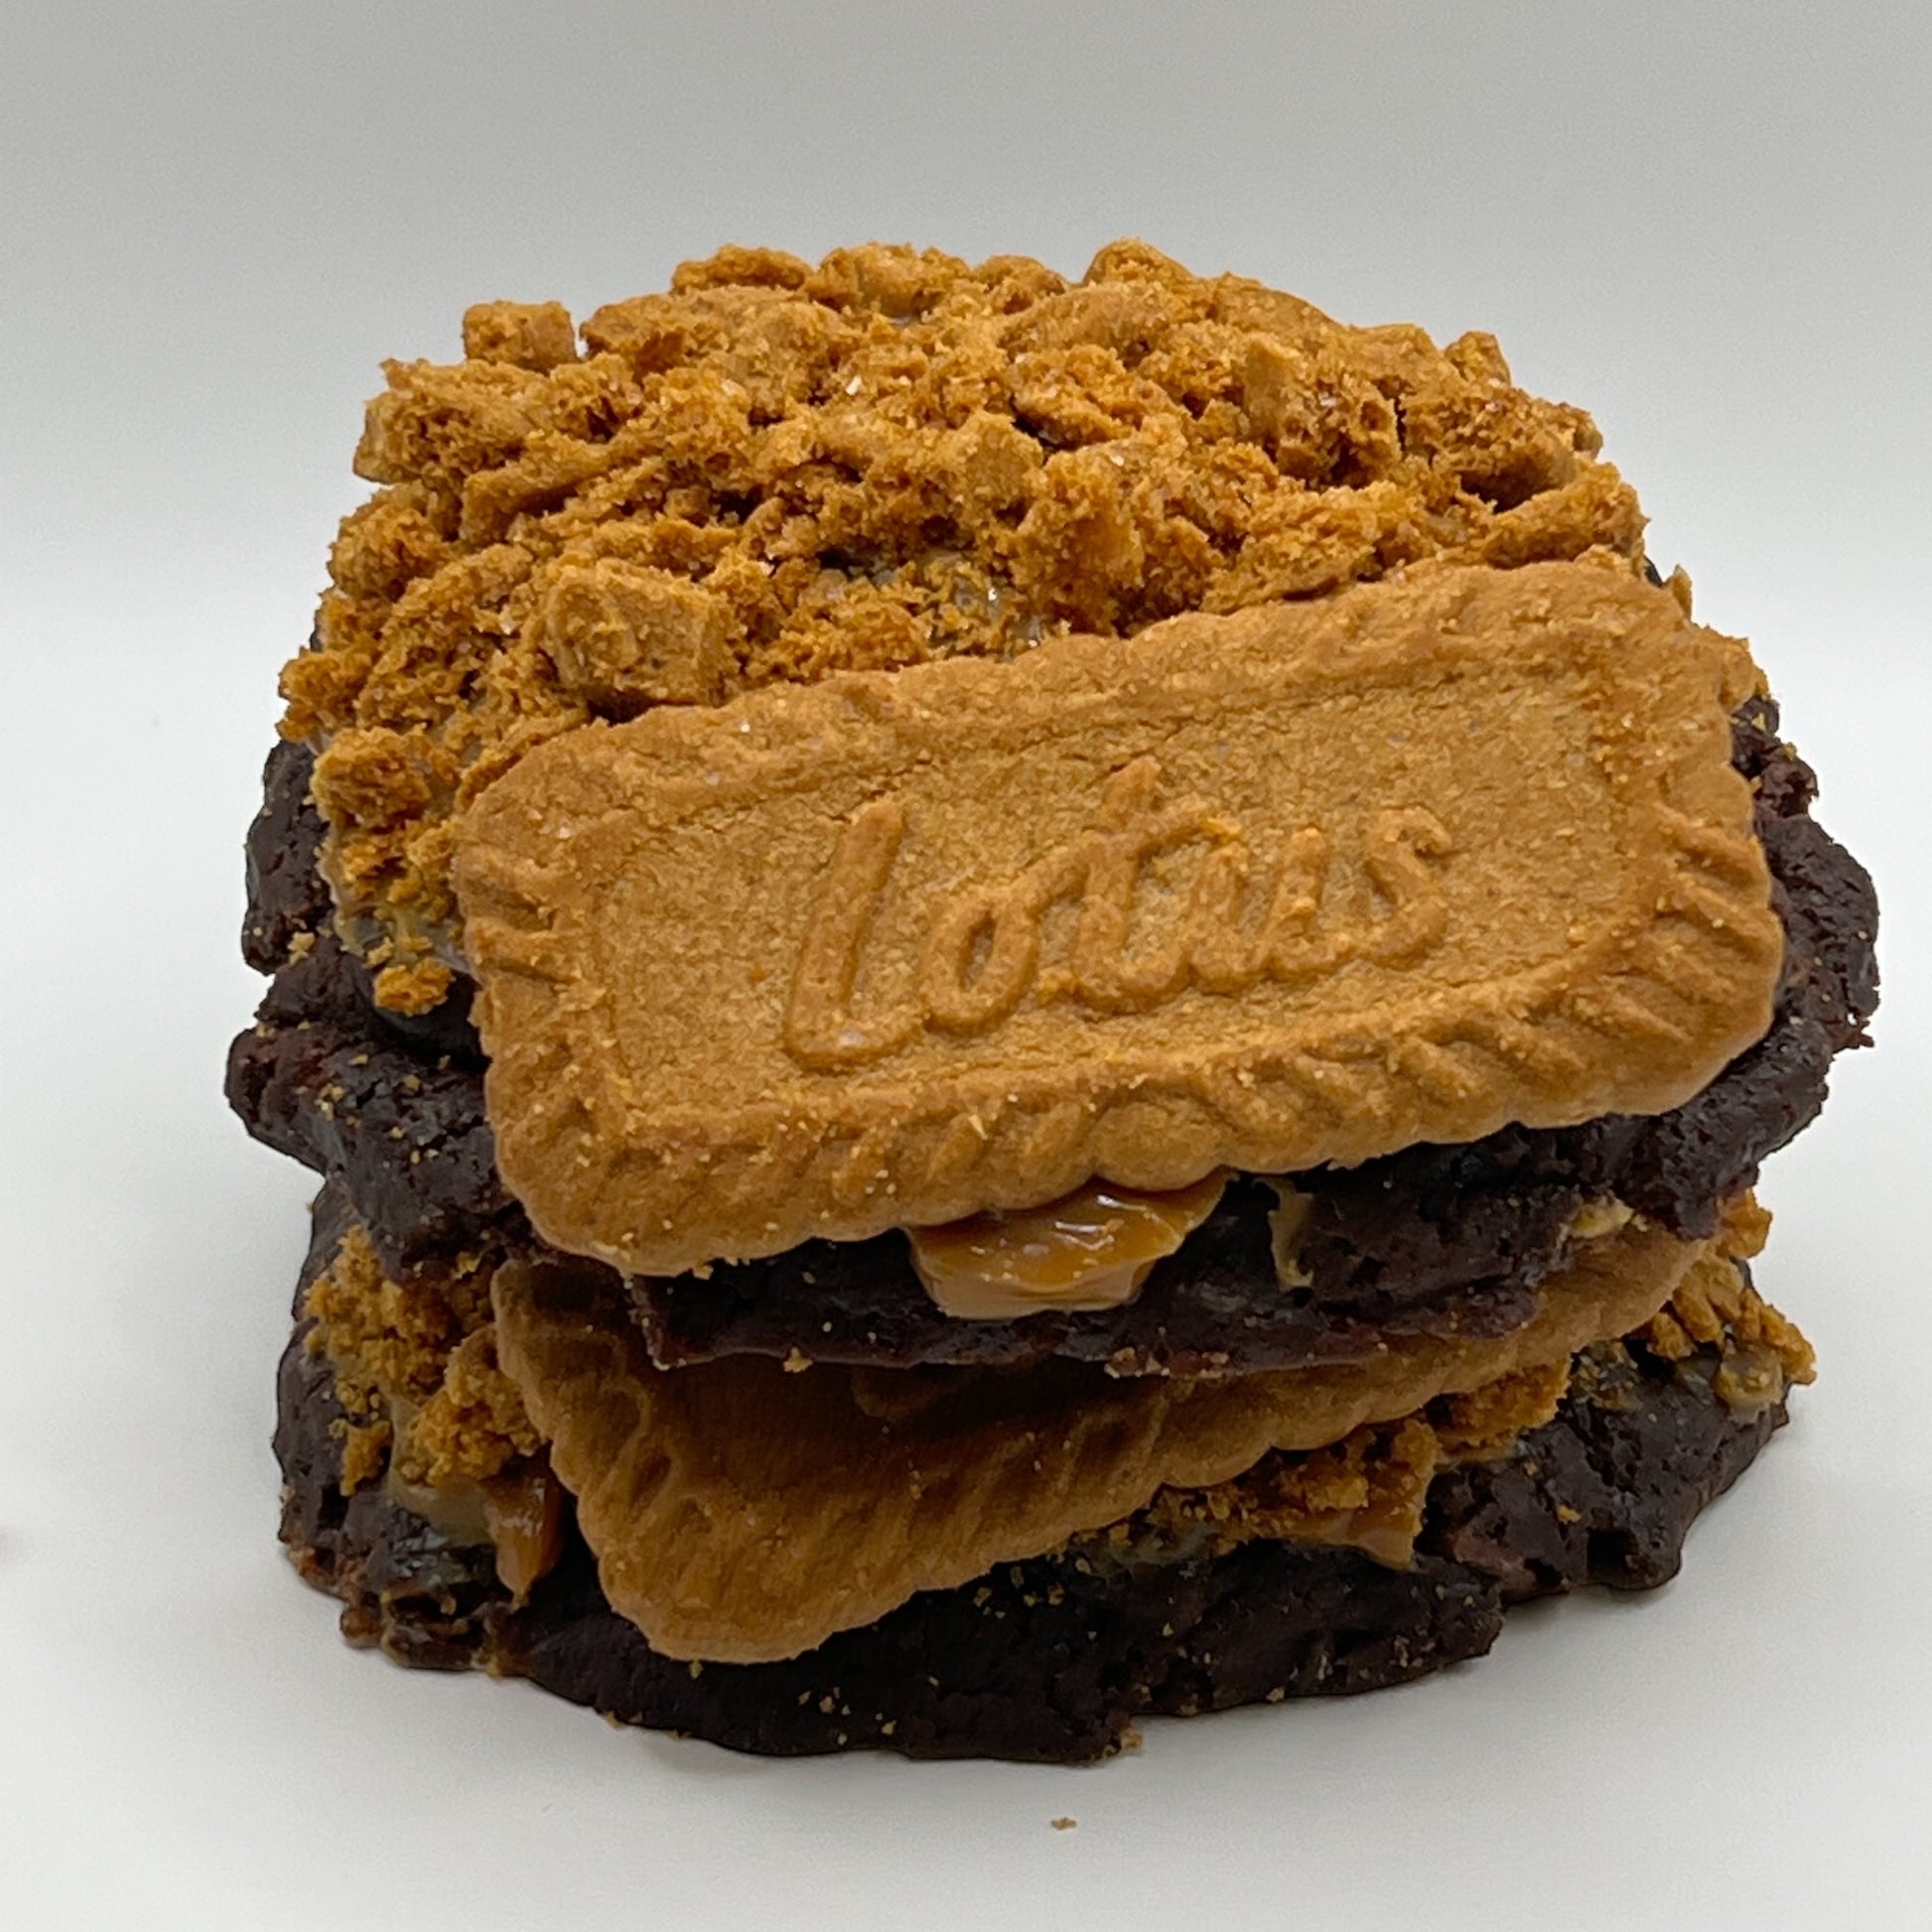 The Caramel Biscoff Cookie broken in half, revealing the gooey caramel and Biscoff layers inside.​